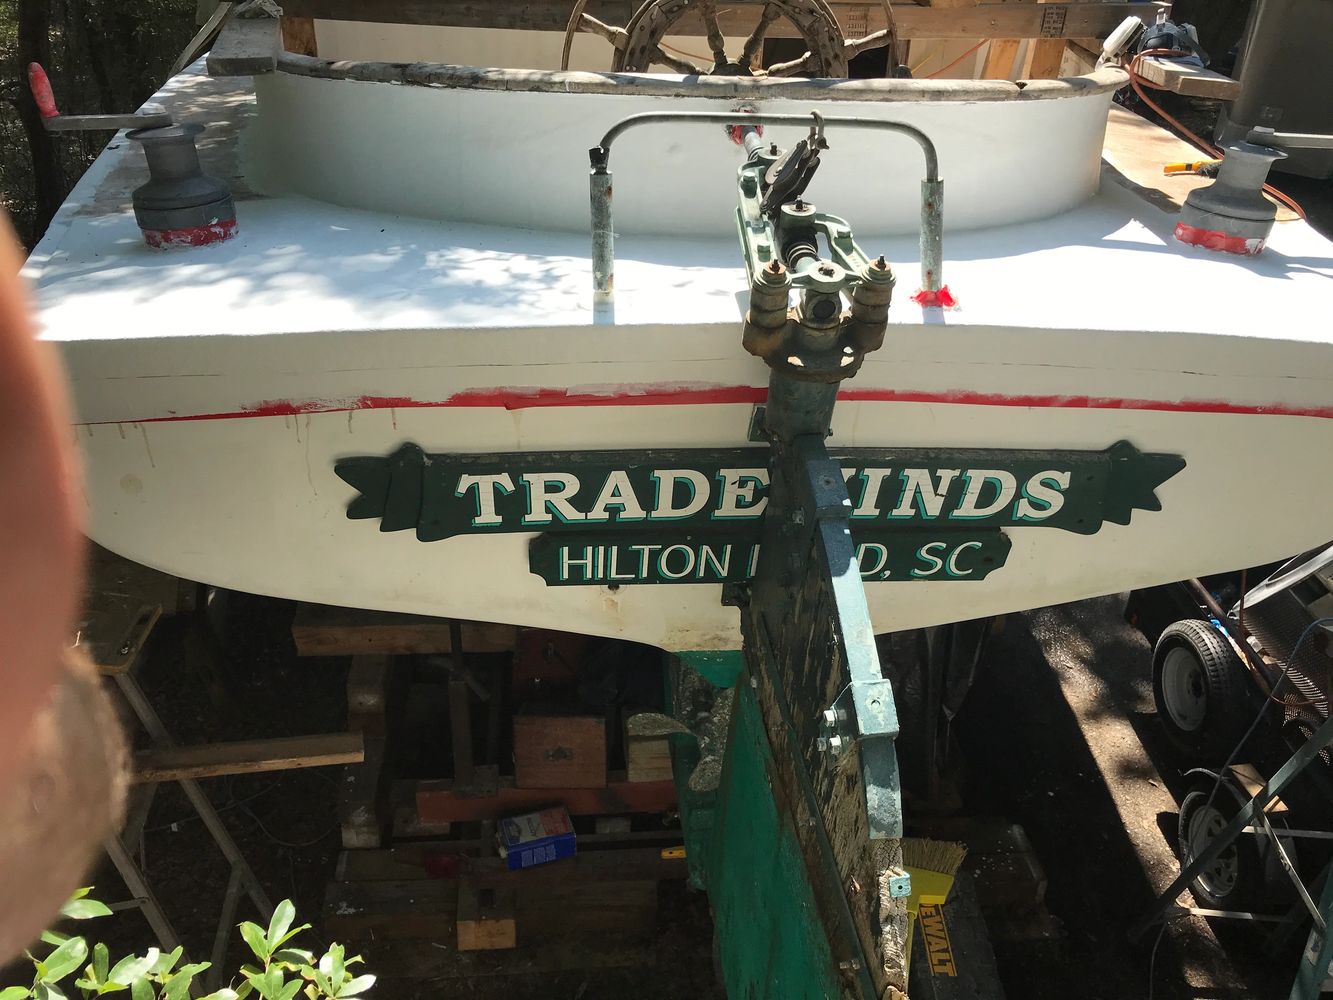 tradewinds 40 sailboat